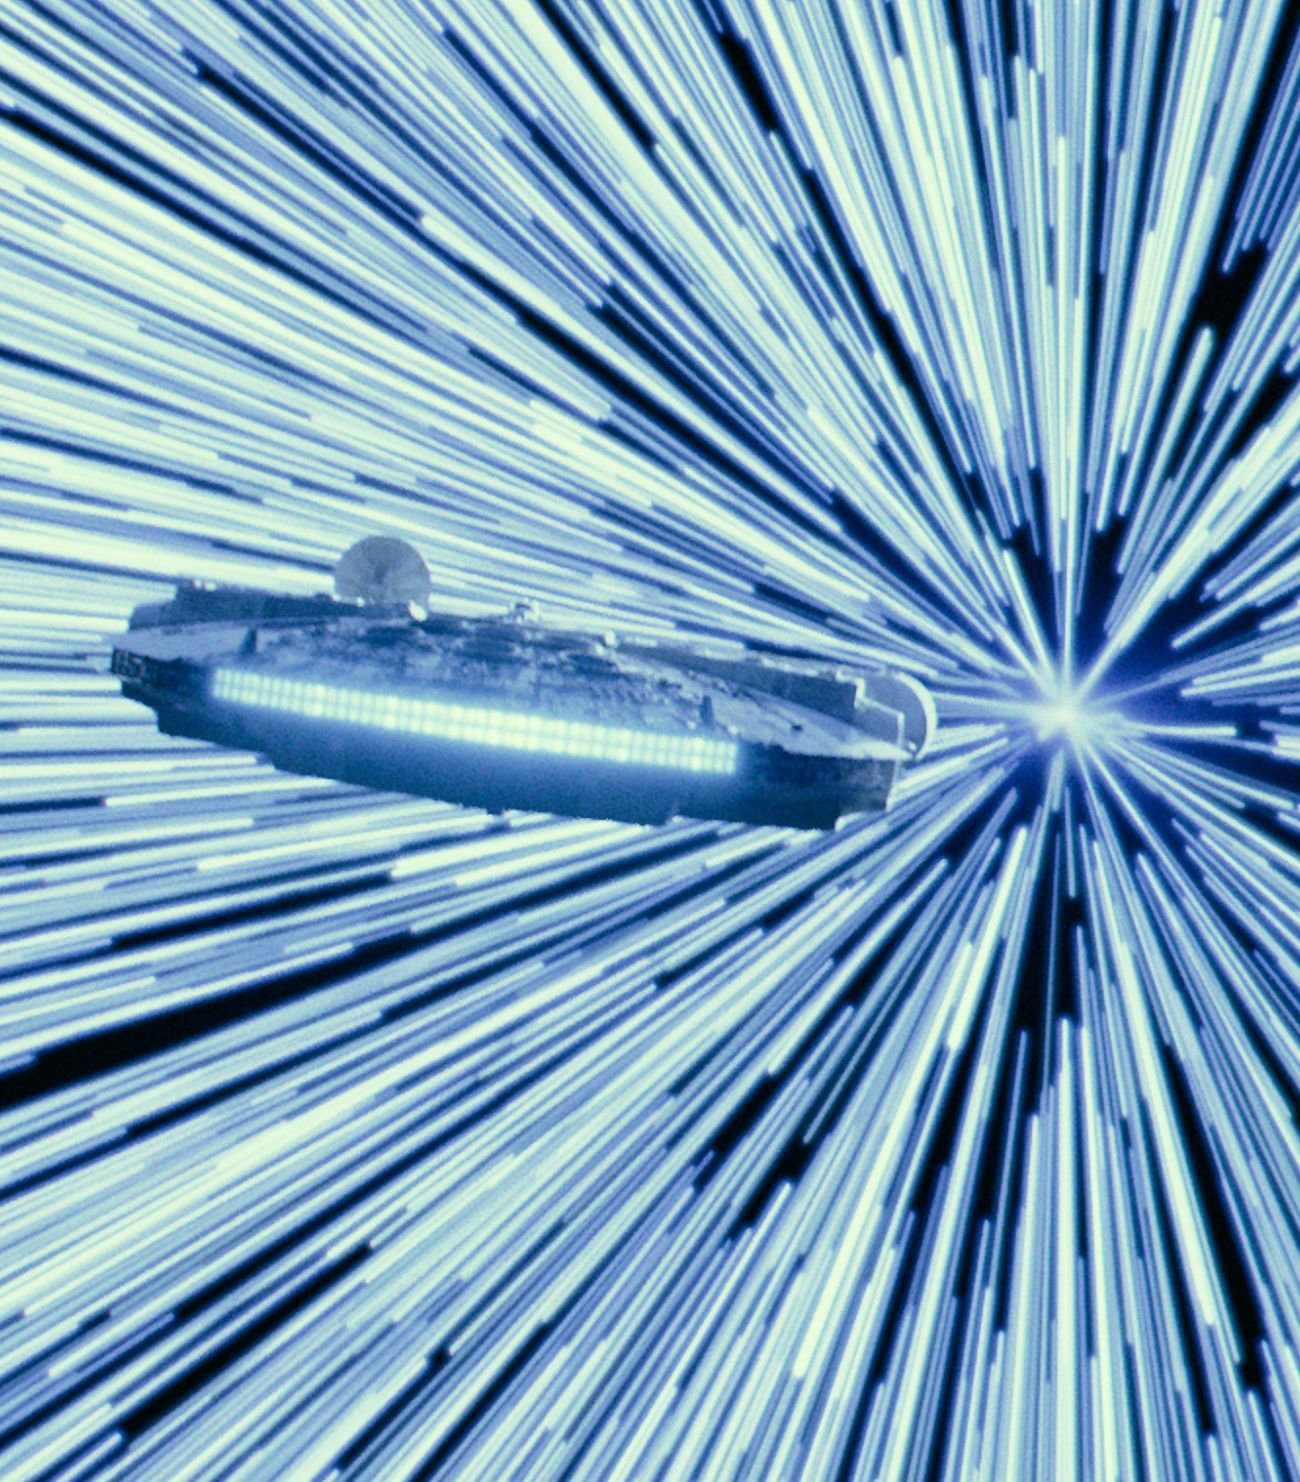 Star Wars The Rise of Skywalker Trailer - Millennium Falcon Vertical